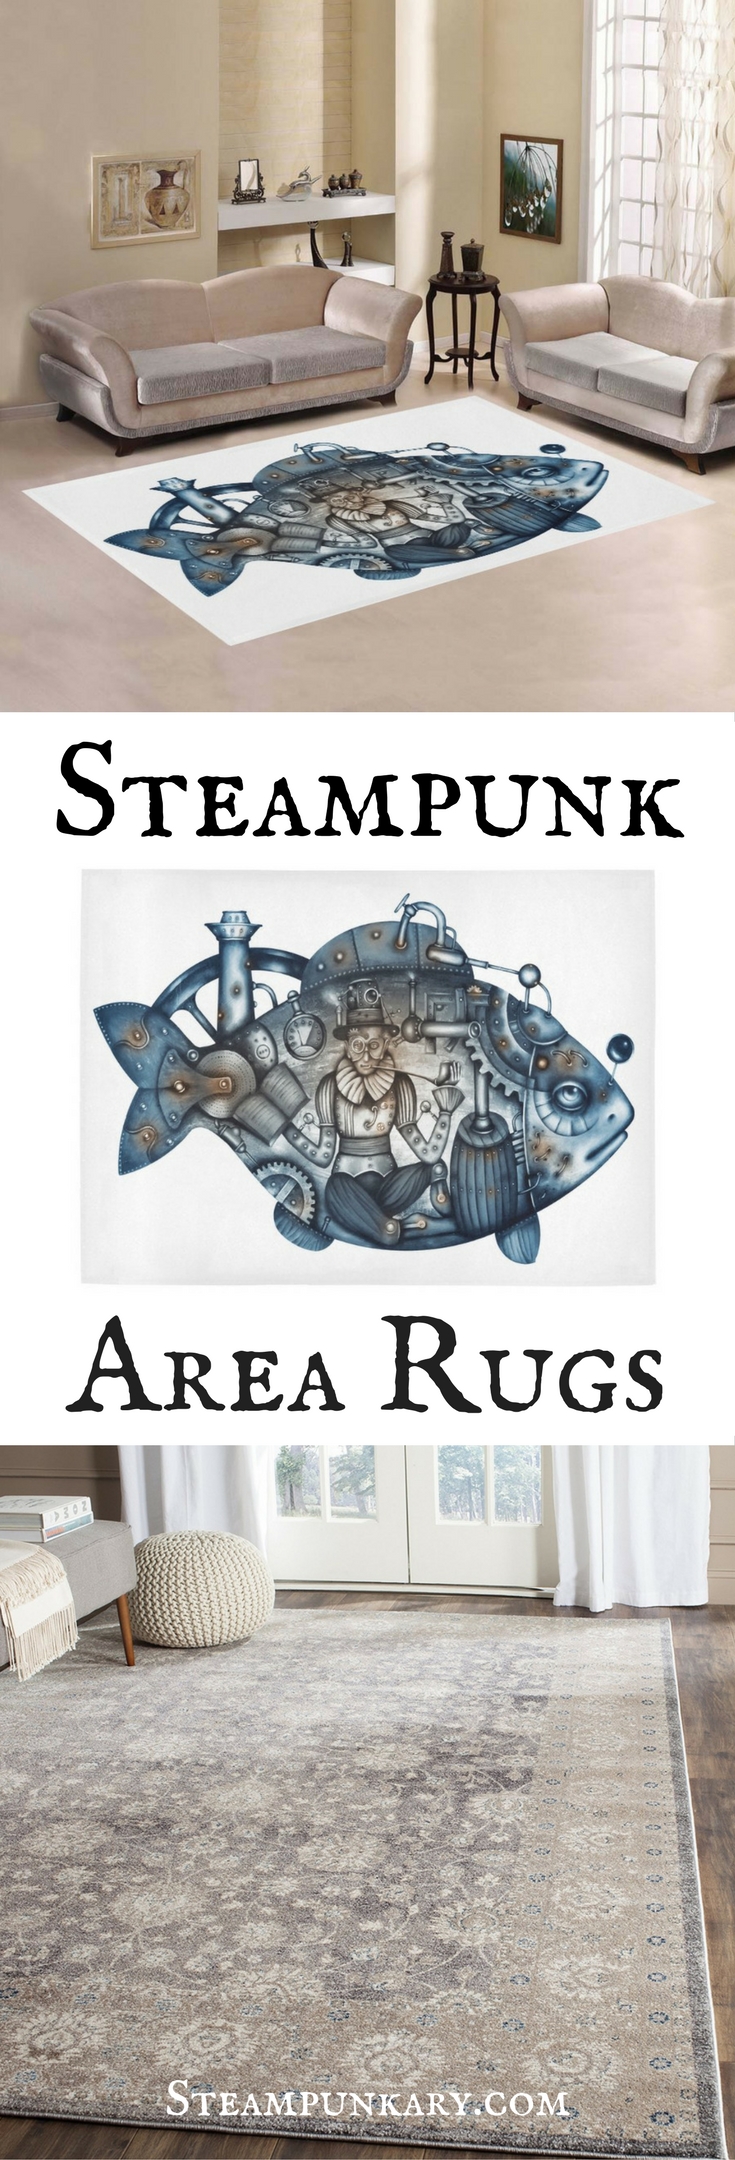 Steampunk Area Rugs